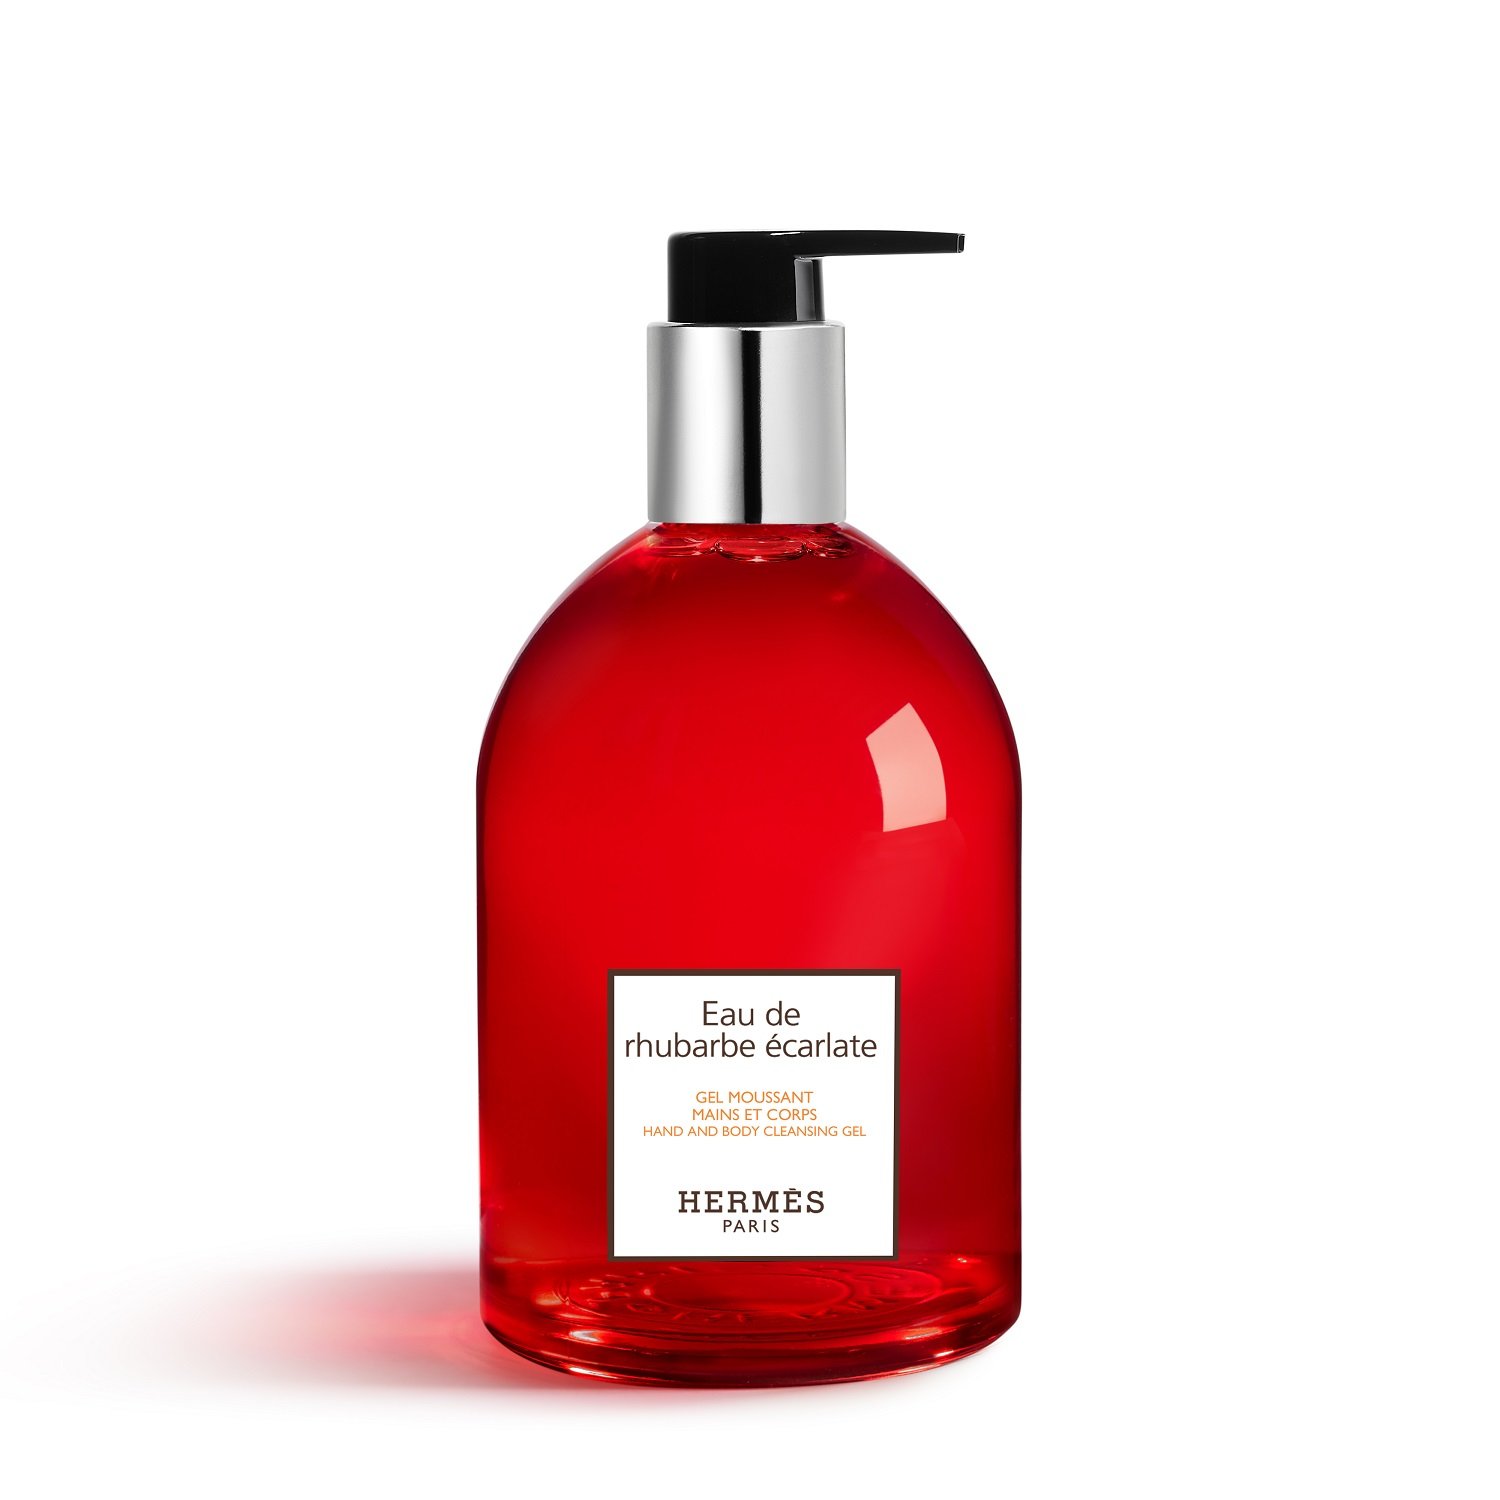 Le Bain Hermès - Eau de rhubarbe ecarlate - Hand and body cleansing gel © Studio des fleurs.jpg